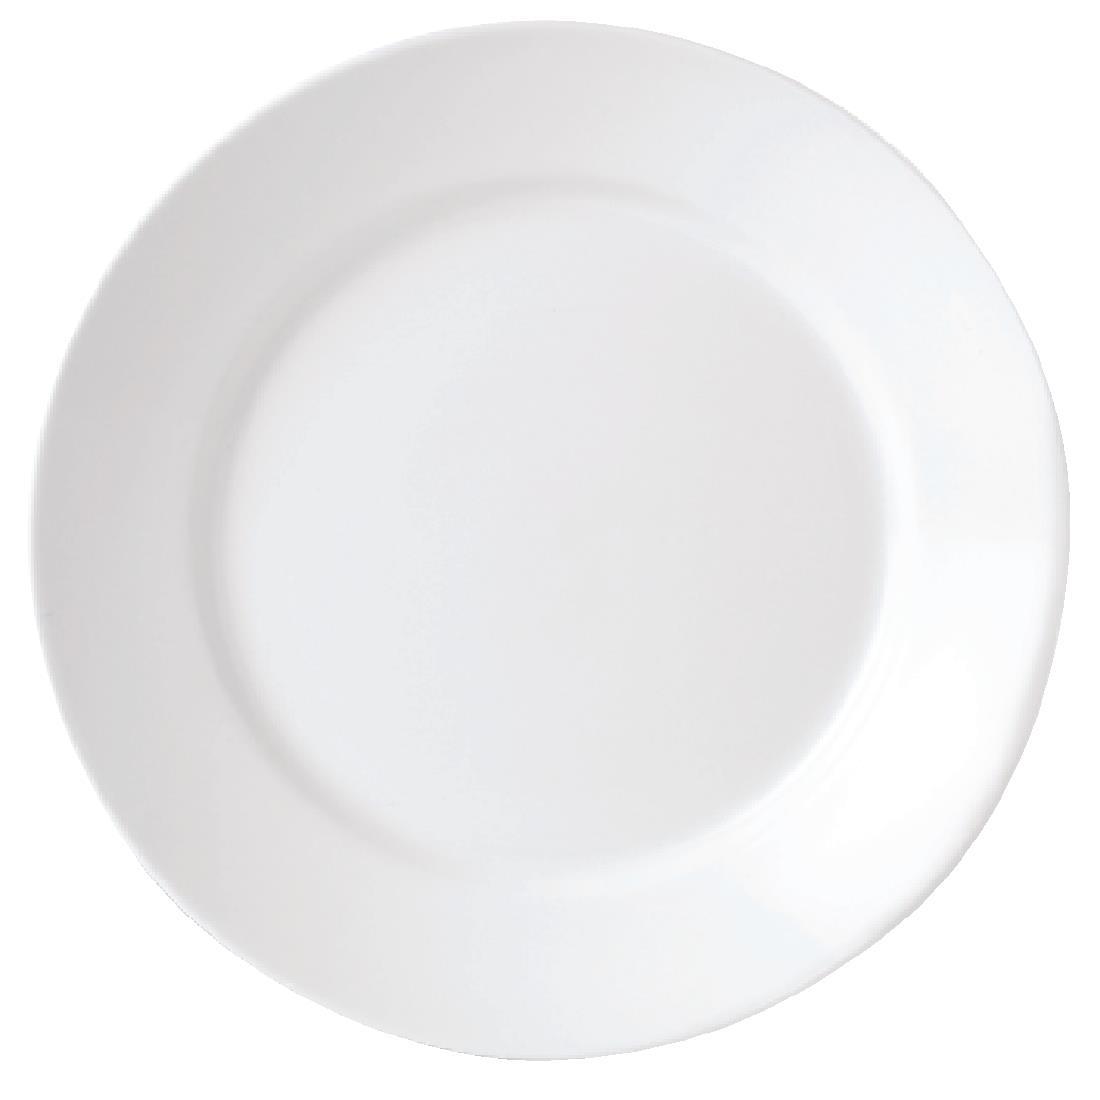 Steelite Simplicity White Ultimate Bowls 269mm (Pack of 6) - V9277  - 1